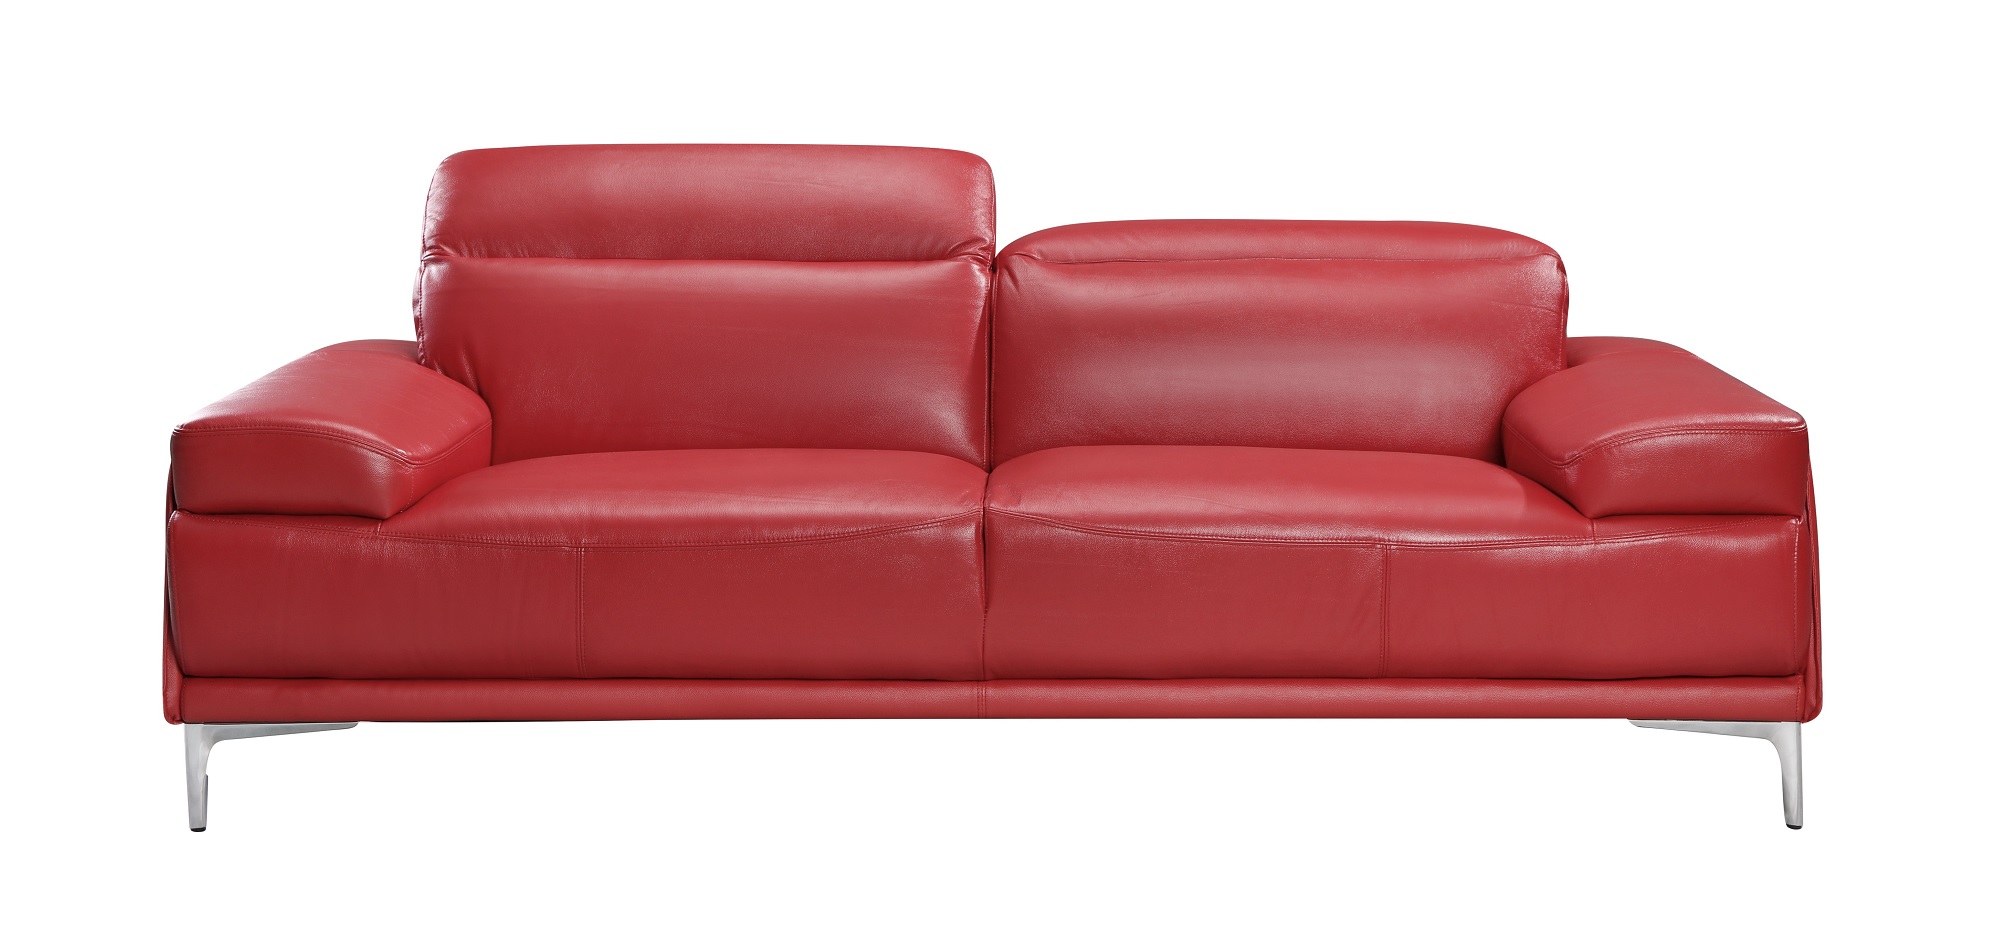 italian leather sofa with memory foam cushions